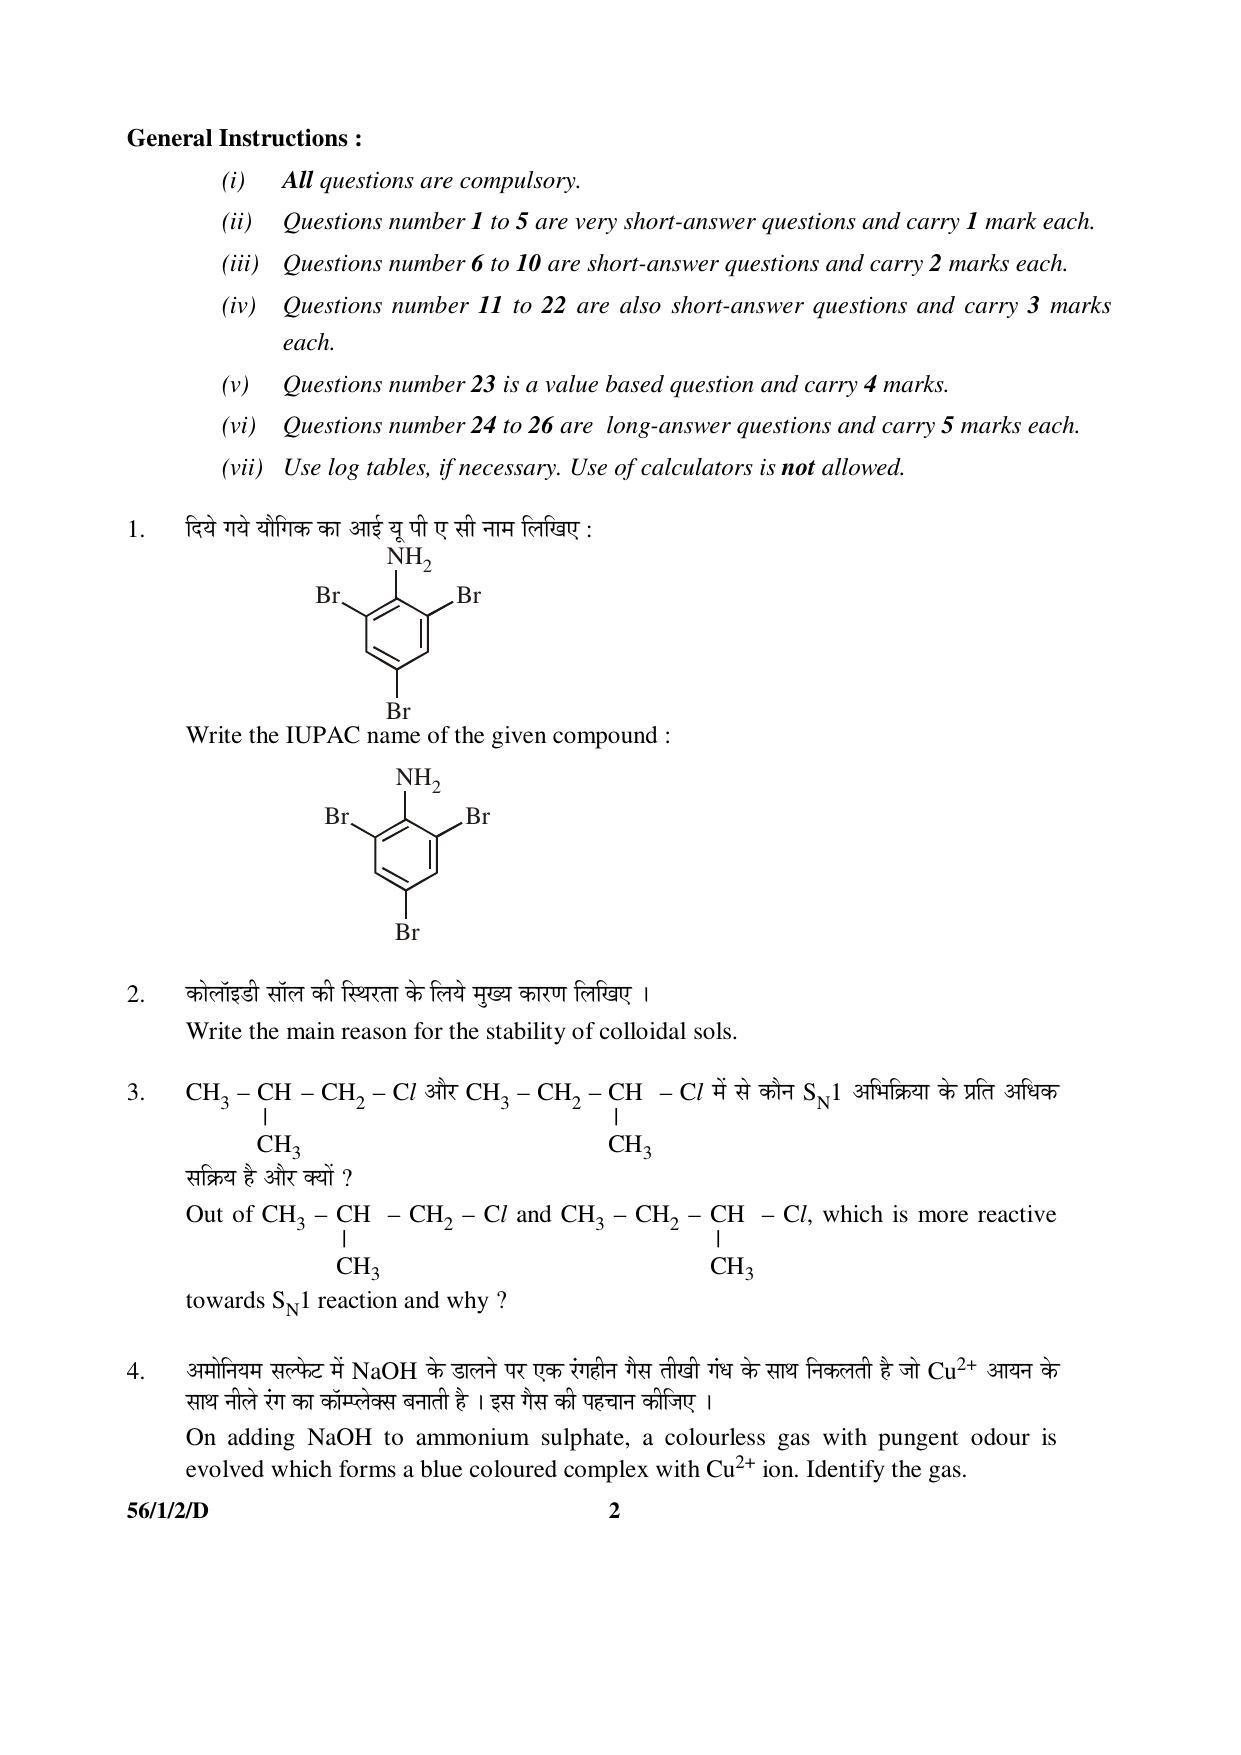 CBSE Class 12 56-1-2-D CHEMISTRY 2016 Question Paper - Page 2